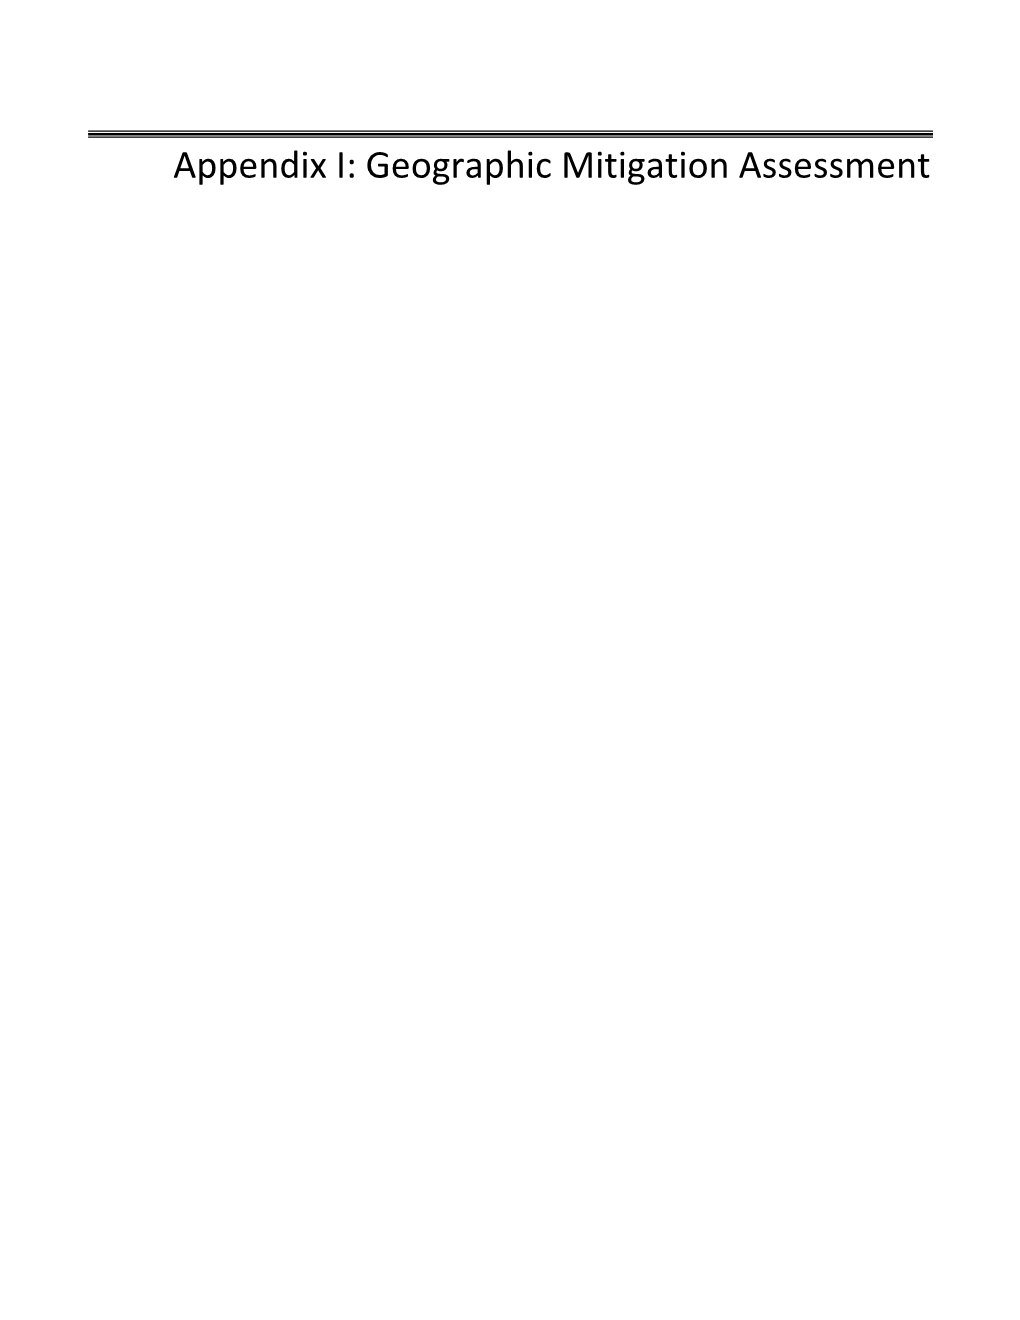 Geographic Mitigation Assessment